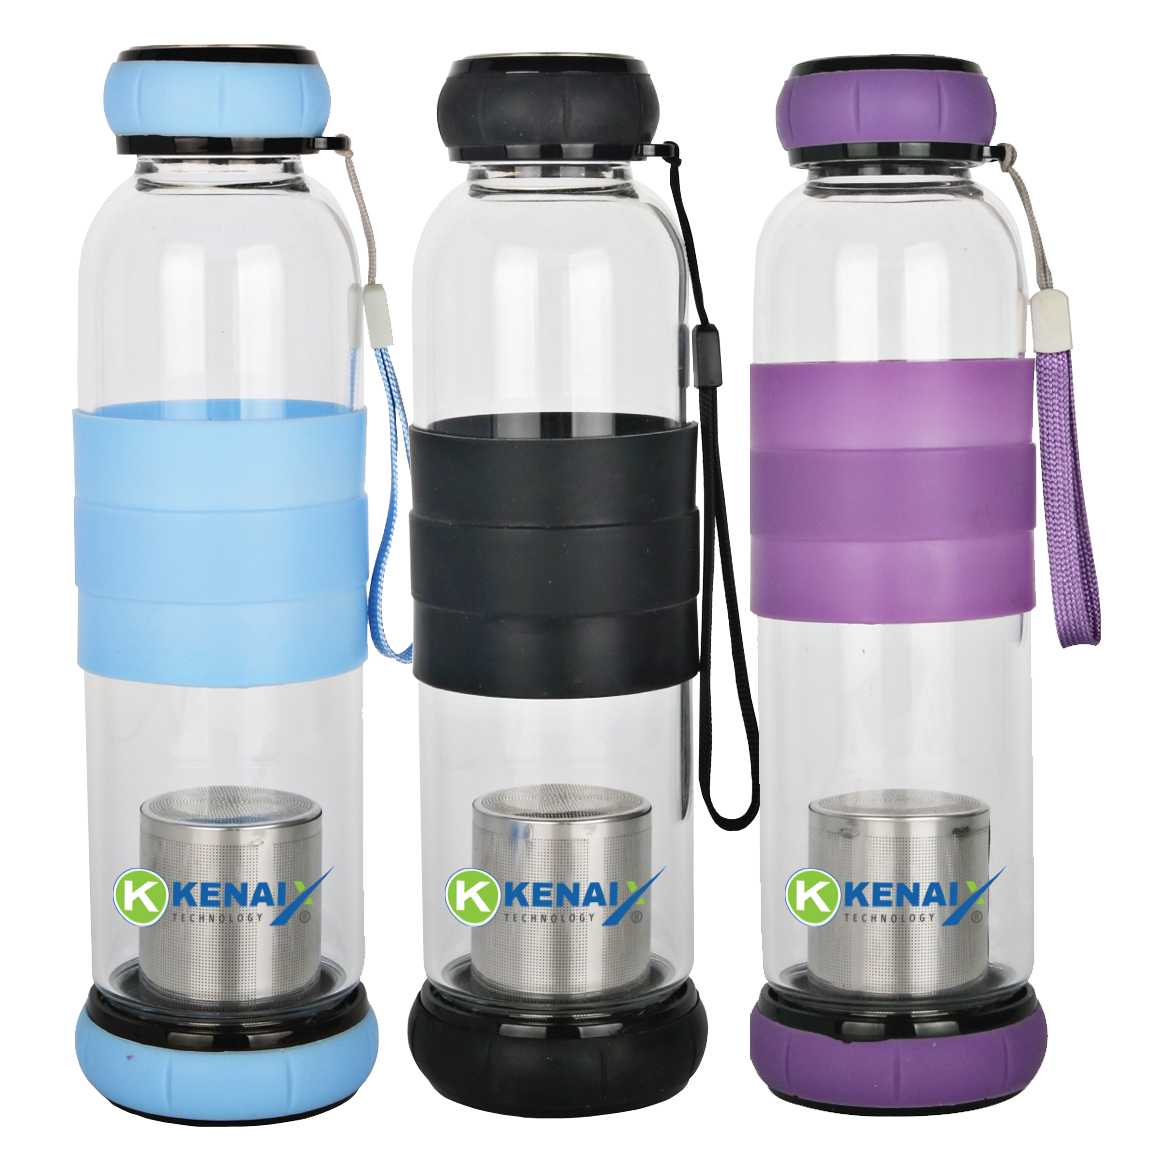 Kenaix AAA+ Premium Glass Water Bottle